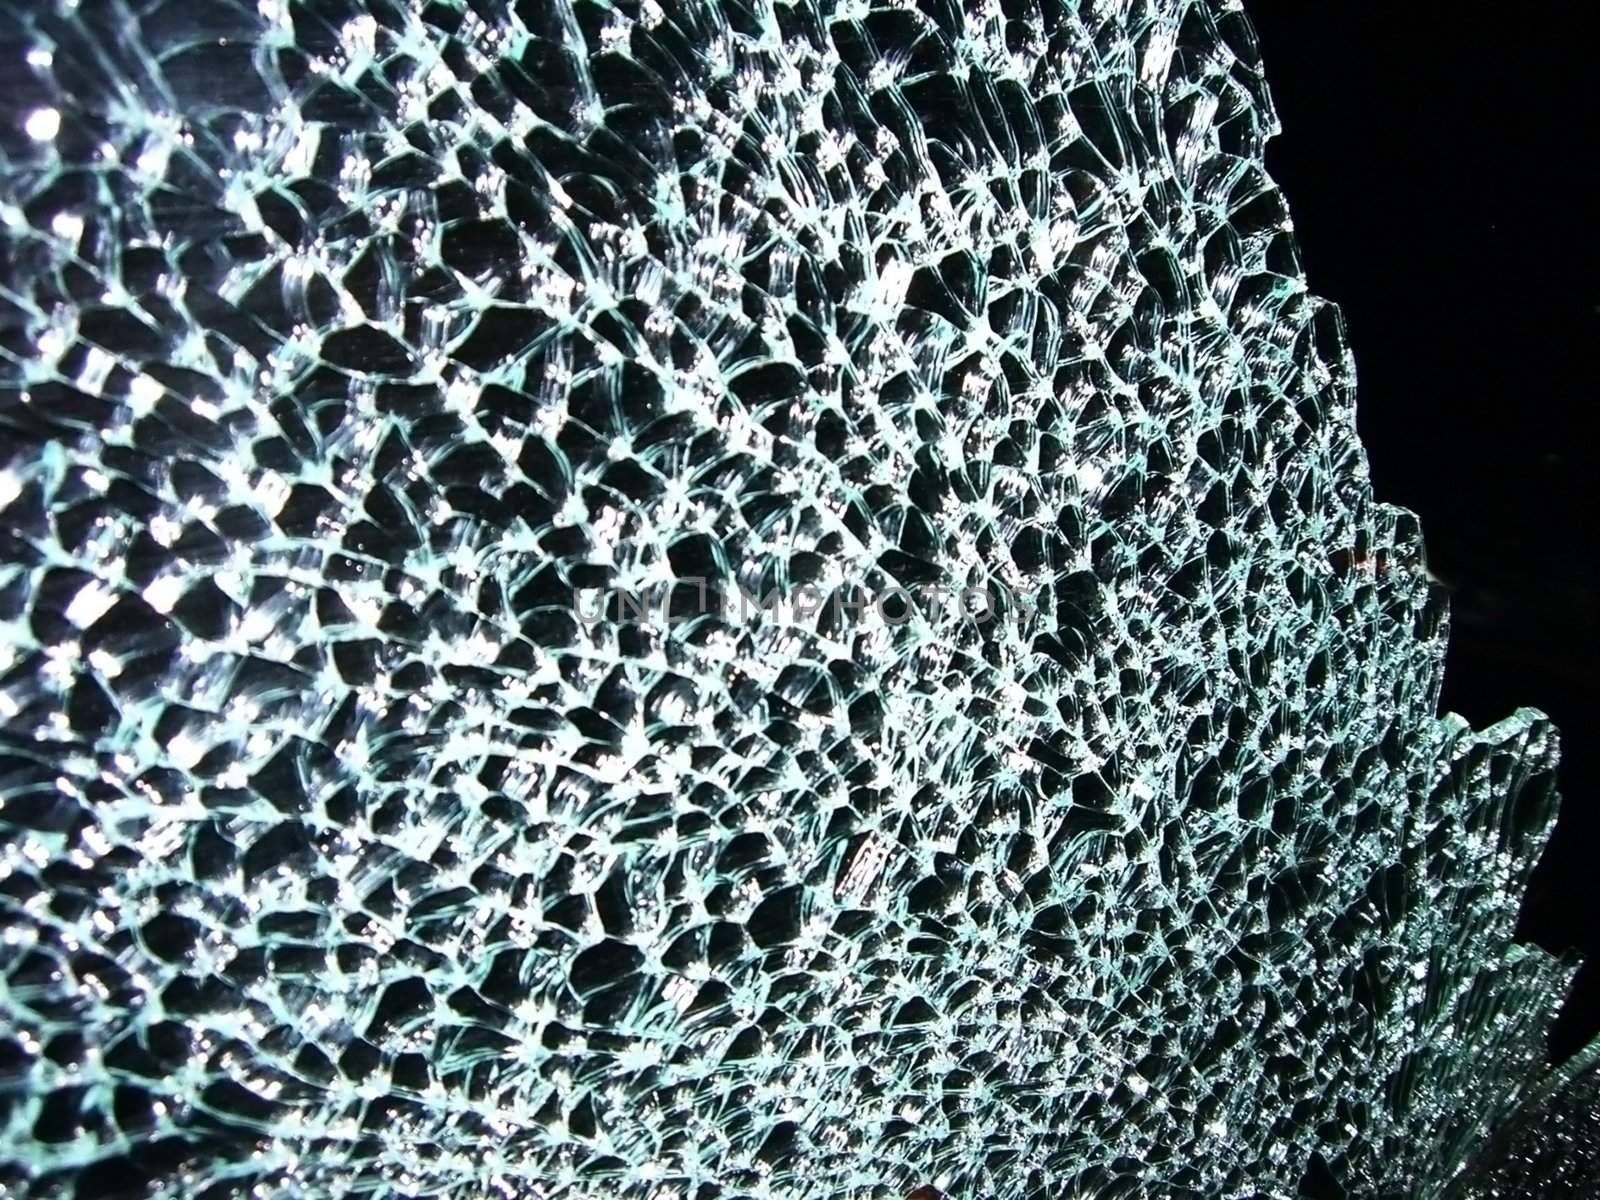 Razbitov glass on machine, beaten mirror, splinter,rift, pattern, background, texture, invoice, abstraction